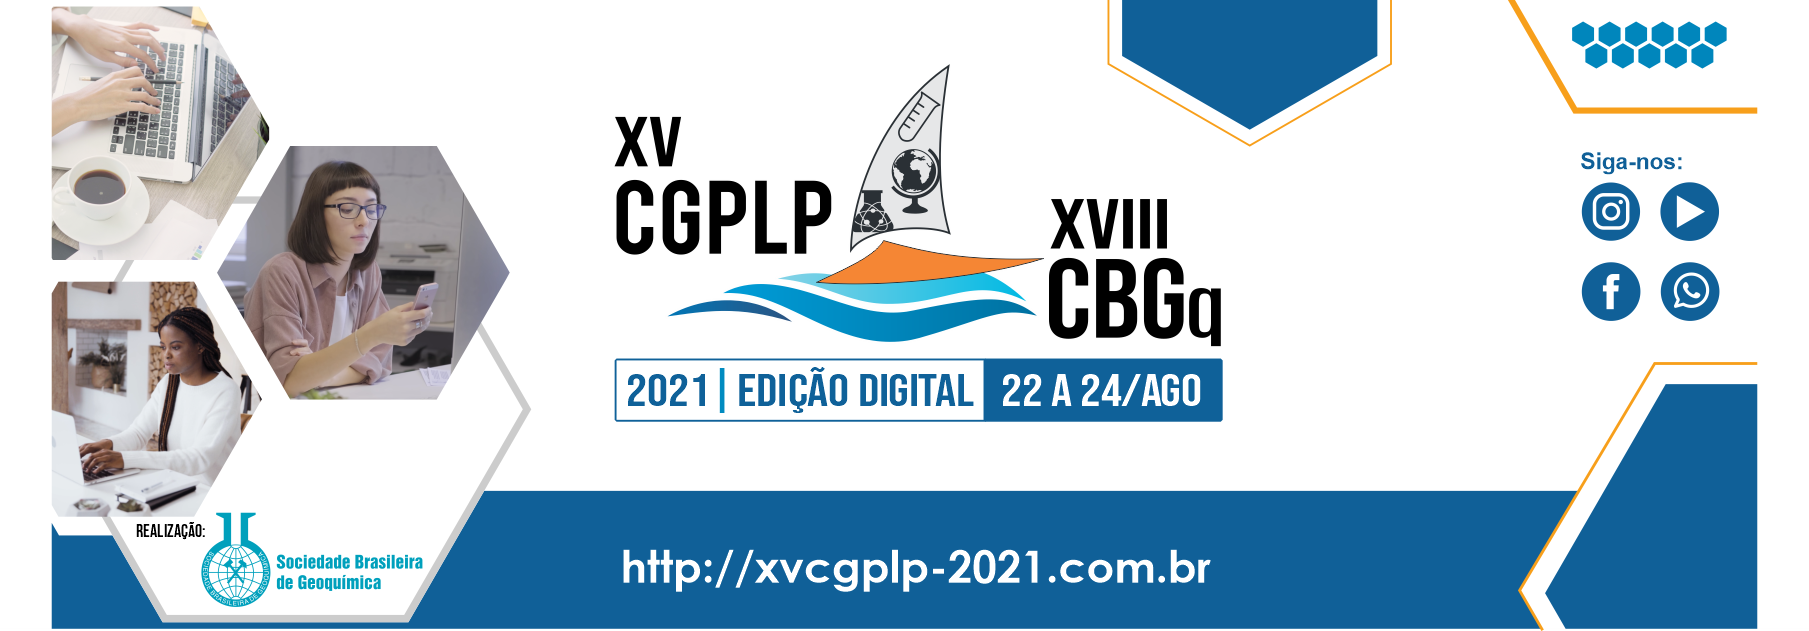 XVCGPLP / XVIIICBGQ EDIÇÃO DIGITAL – 2021!